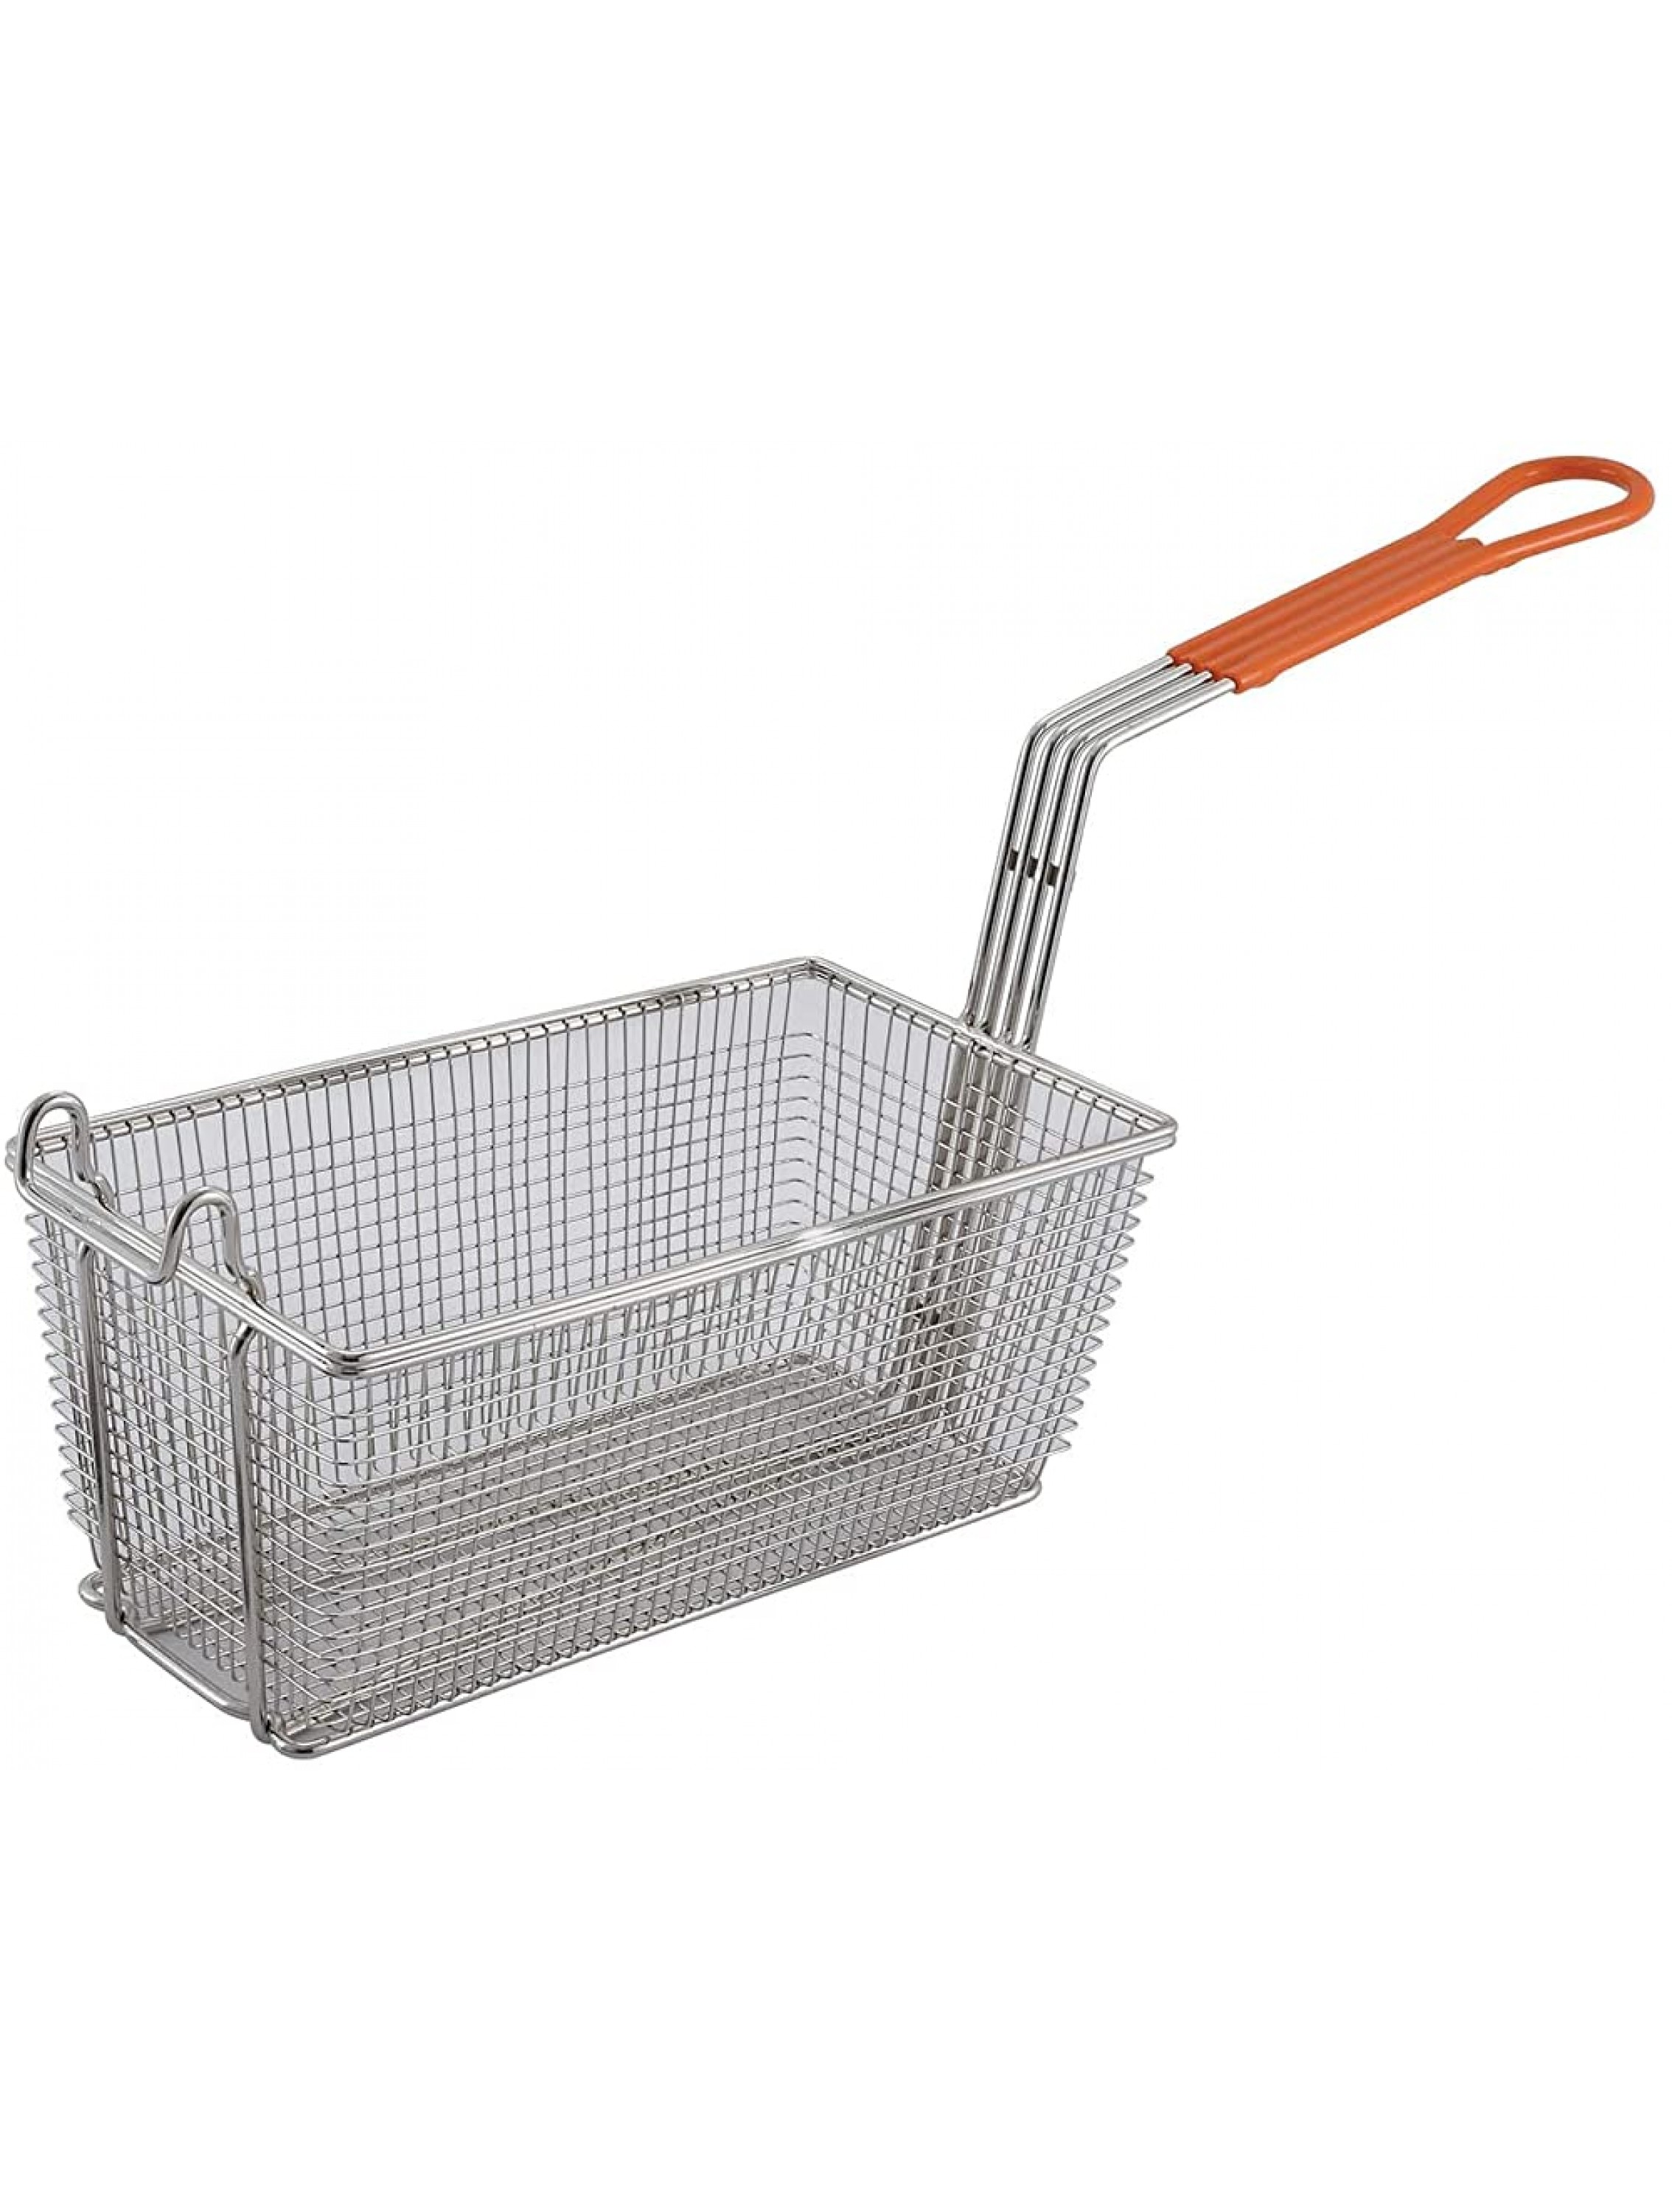 Winco Fry Basket with Orange Handle Medium - BOJZOV723